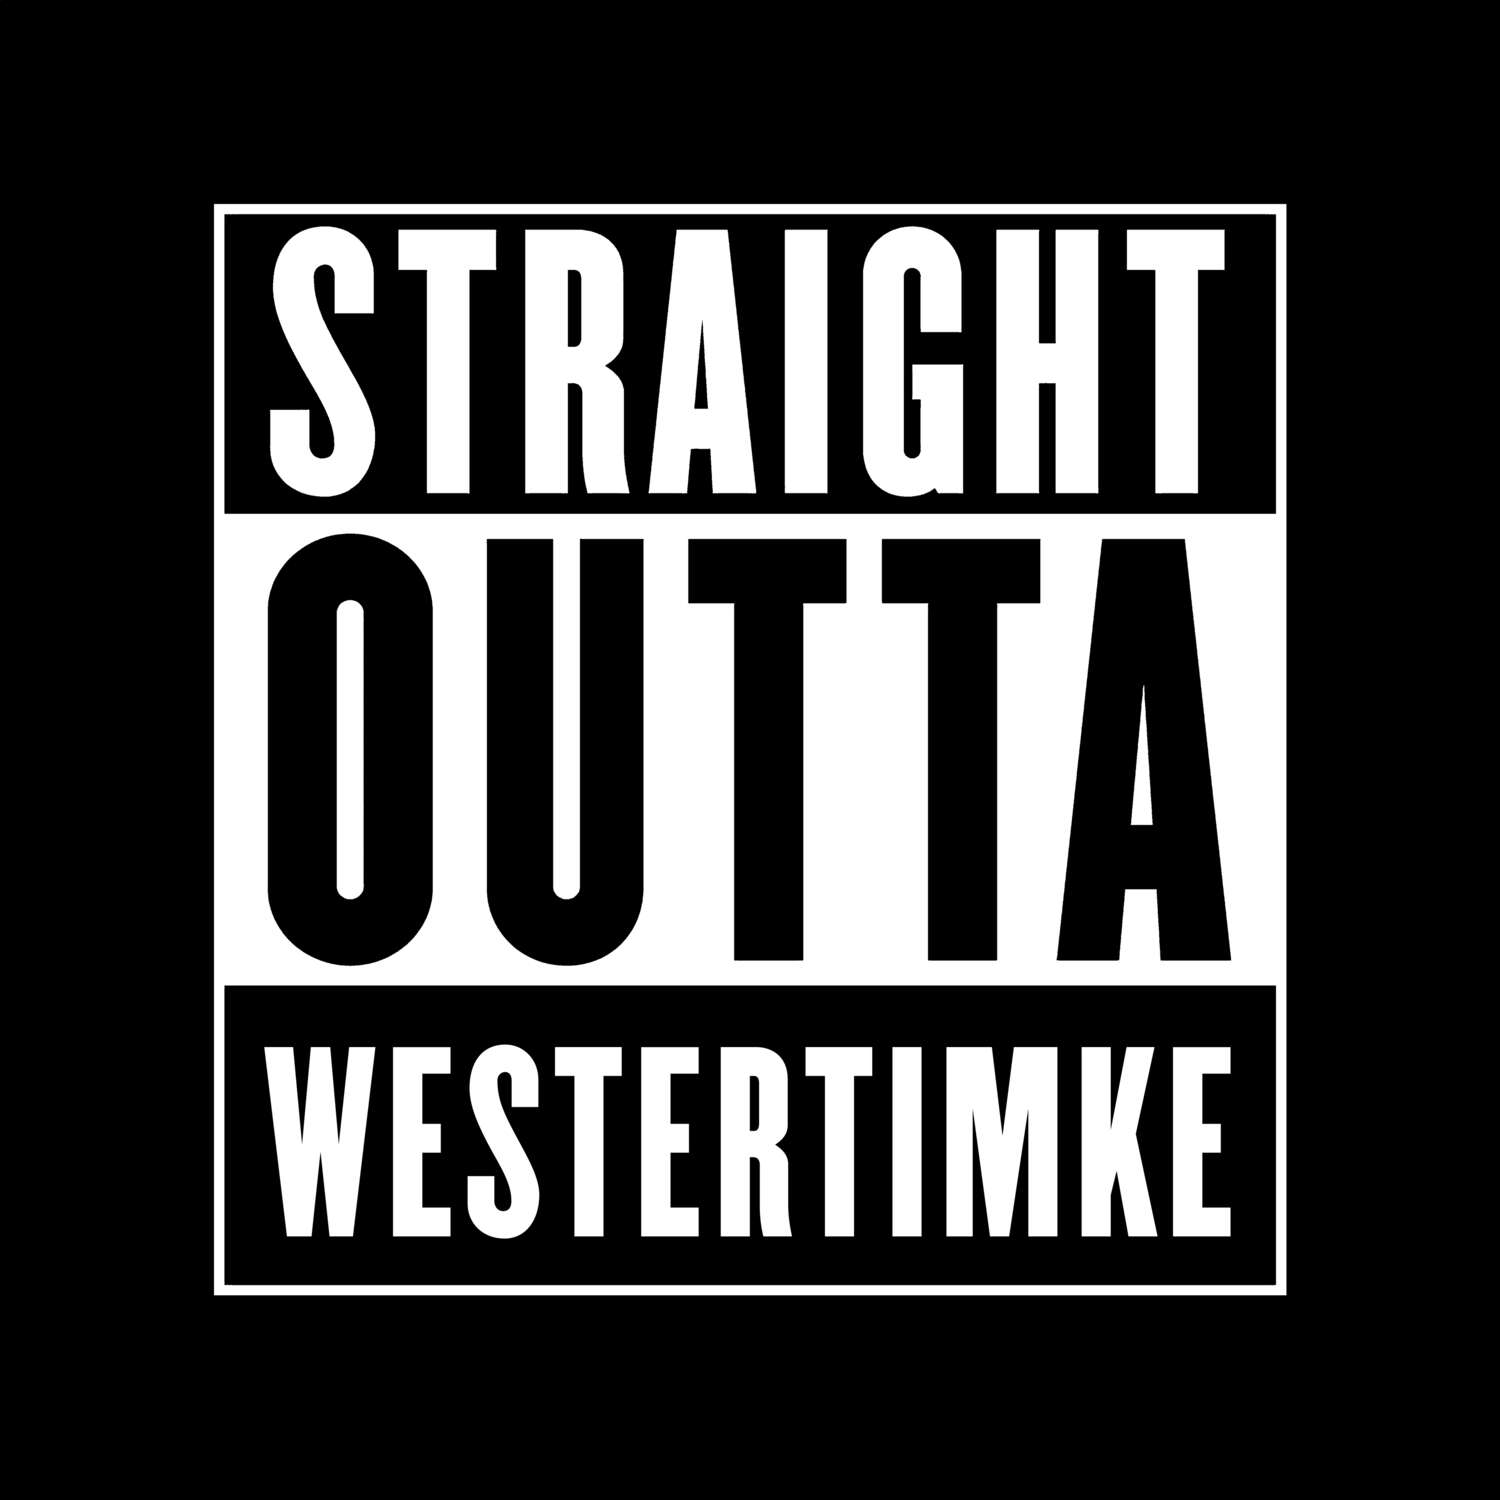 Westertimke T-Shirt »Straight Outta«